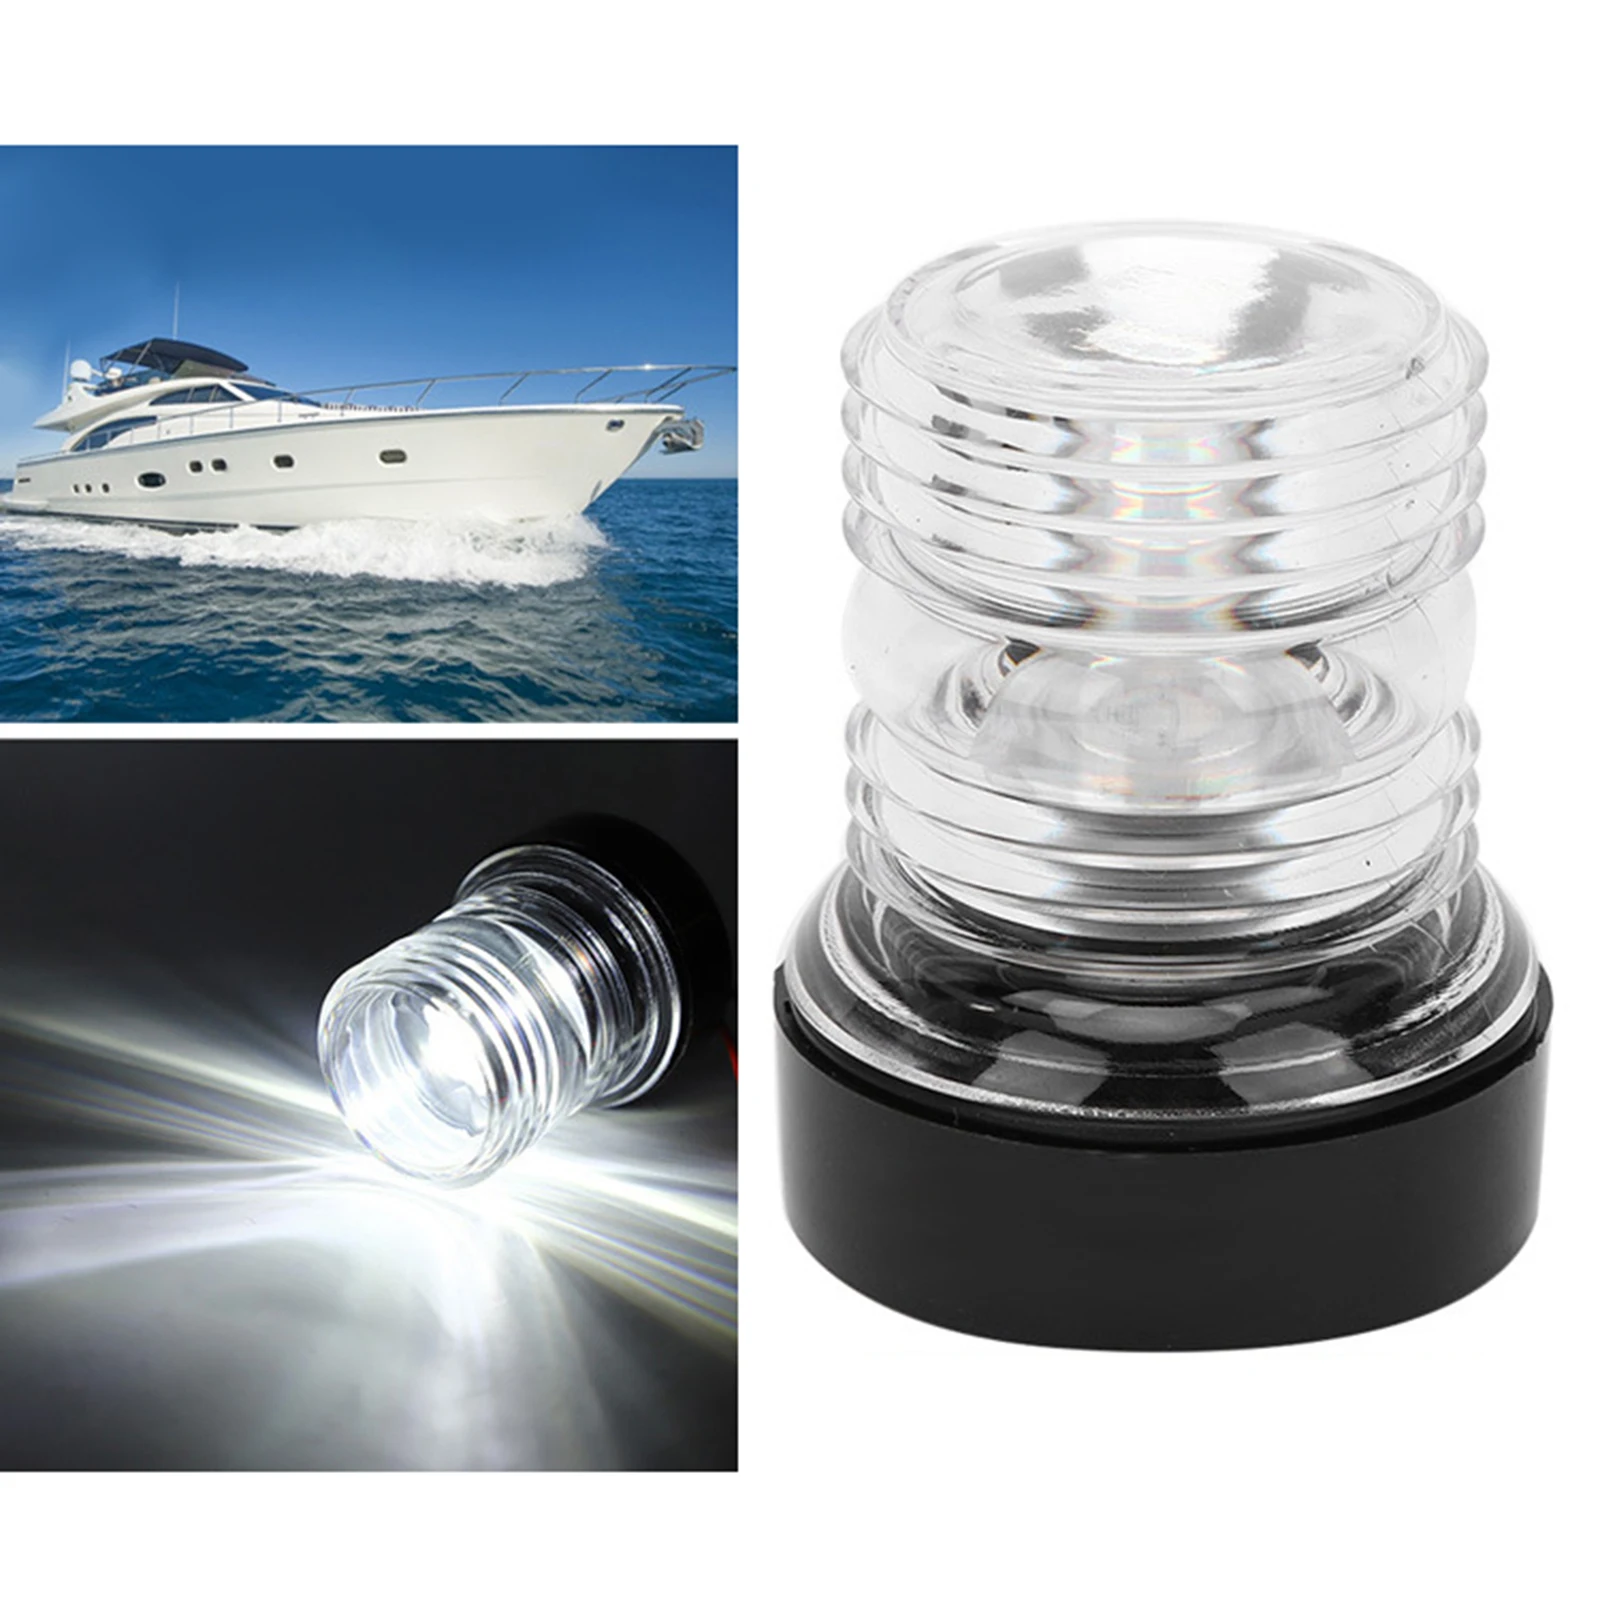 Durable Yacht Anchor Light Marine Boat All Round Stern Round 360 Navigation Lamp Super Bright Pontoon 12-24V Lights